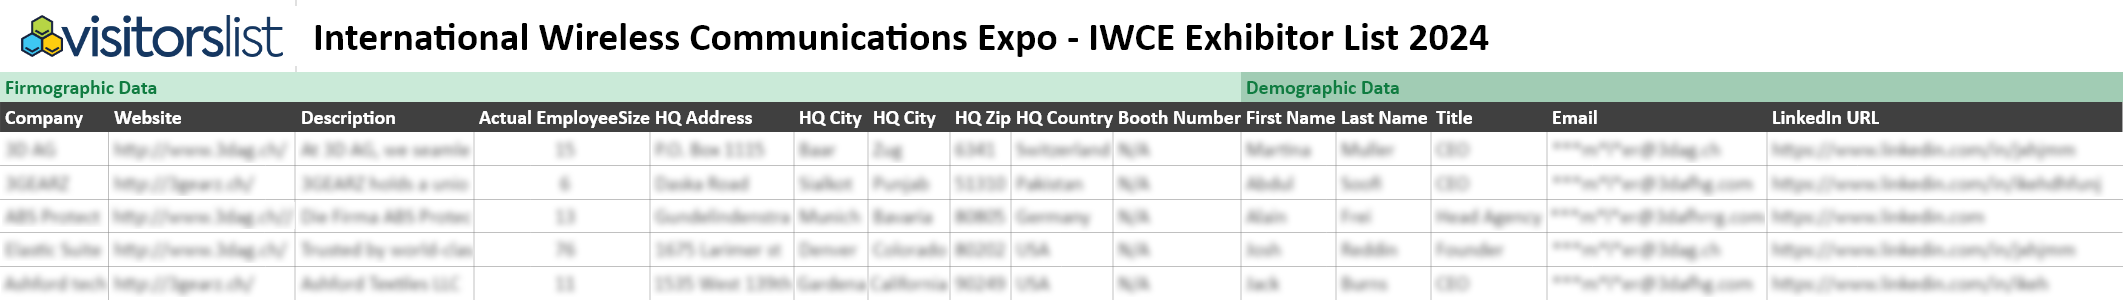 International Wireless Communications Expo Exhibitors List 2024